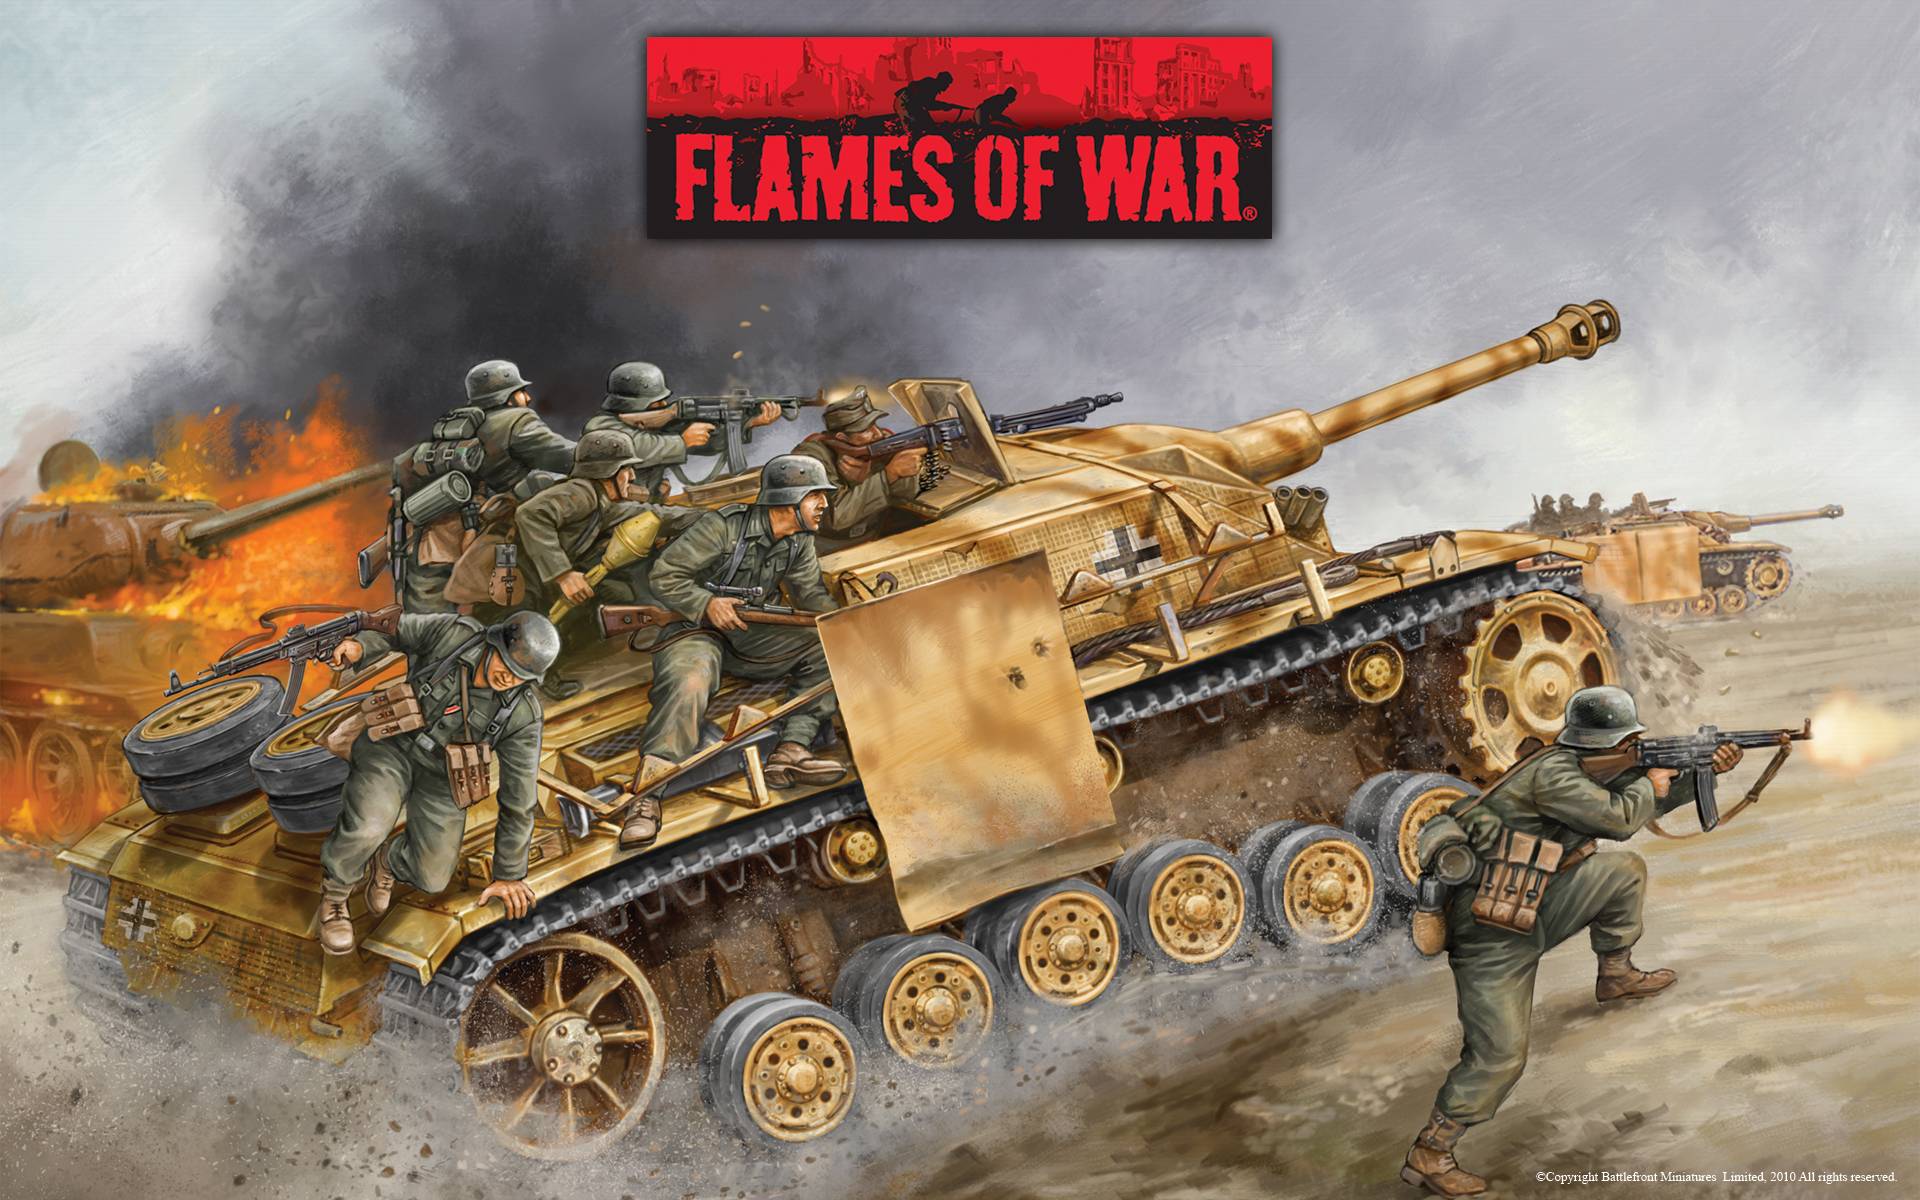 Wallpaper Flames of War Tanks Soldiers Games, free desktop photo